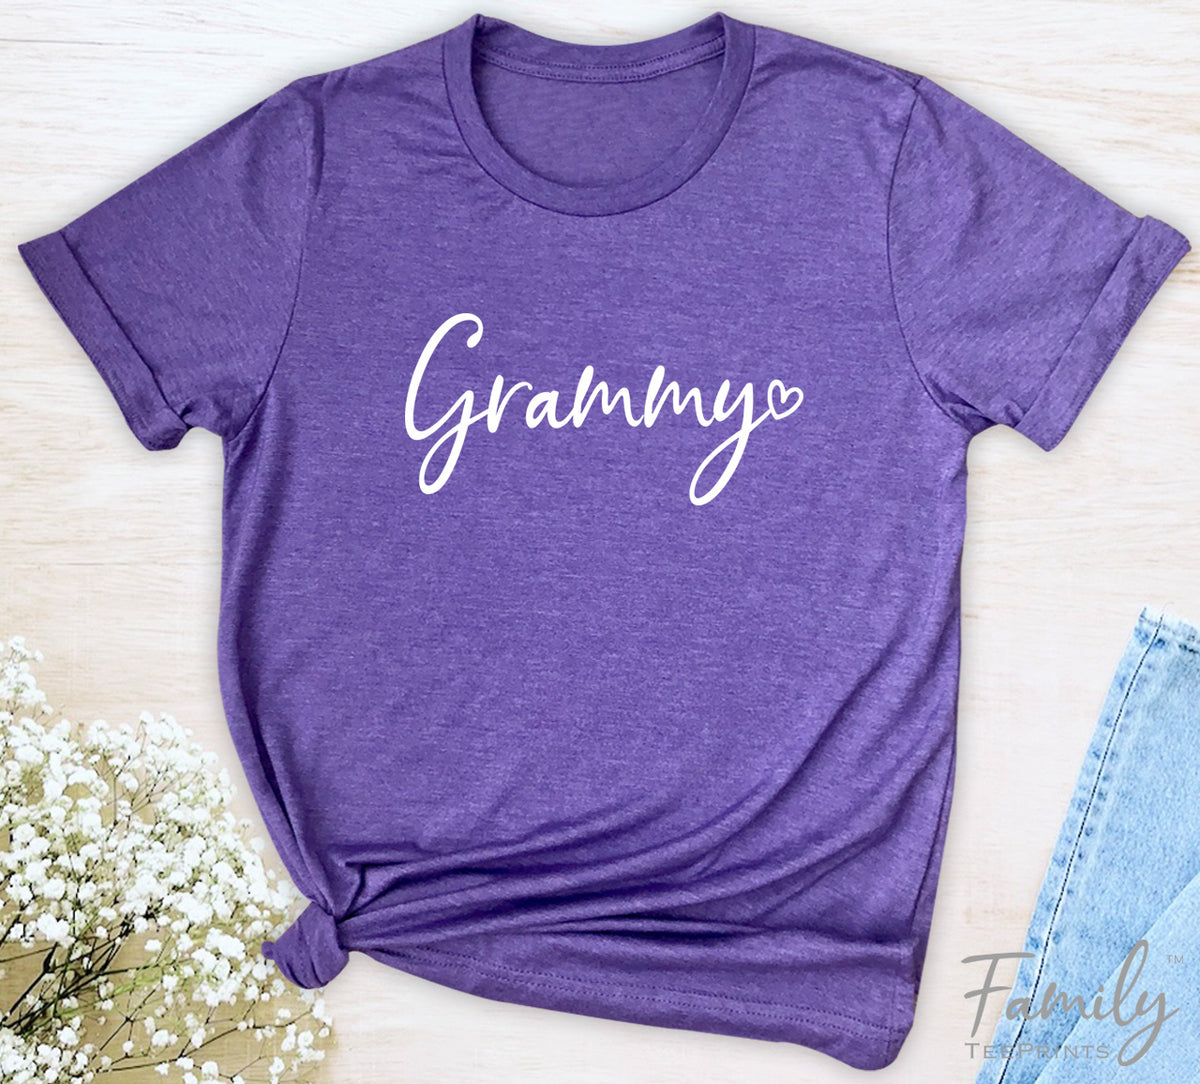 Grammy Heart - Unisex T-shirt - Grammy Shirt - Gift For New Grammy